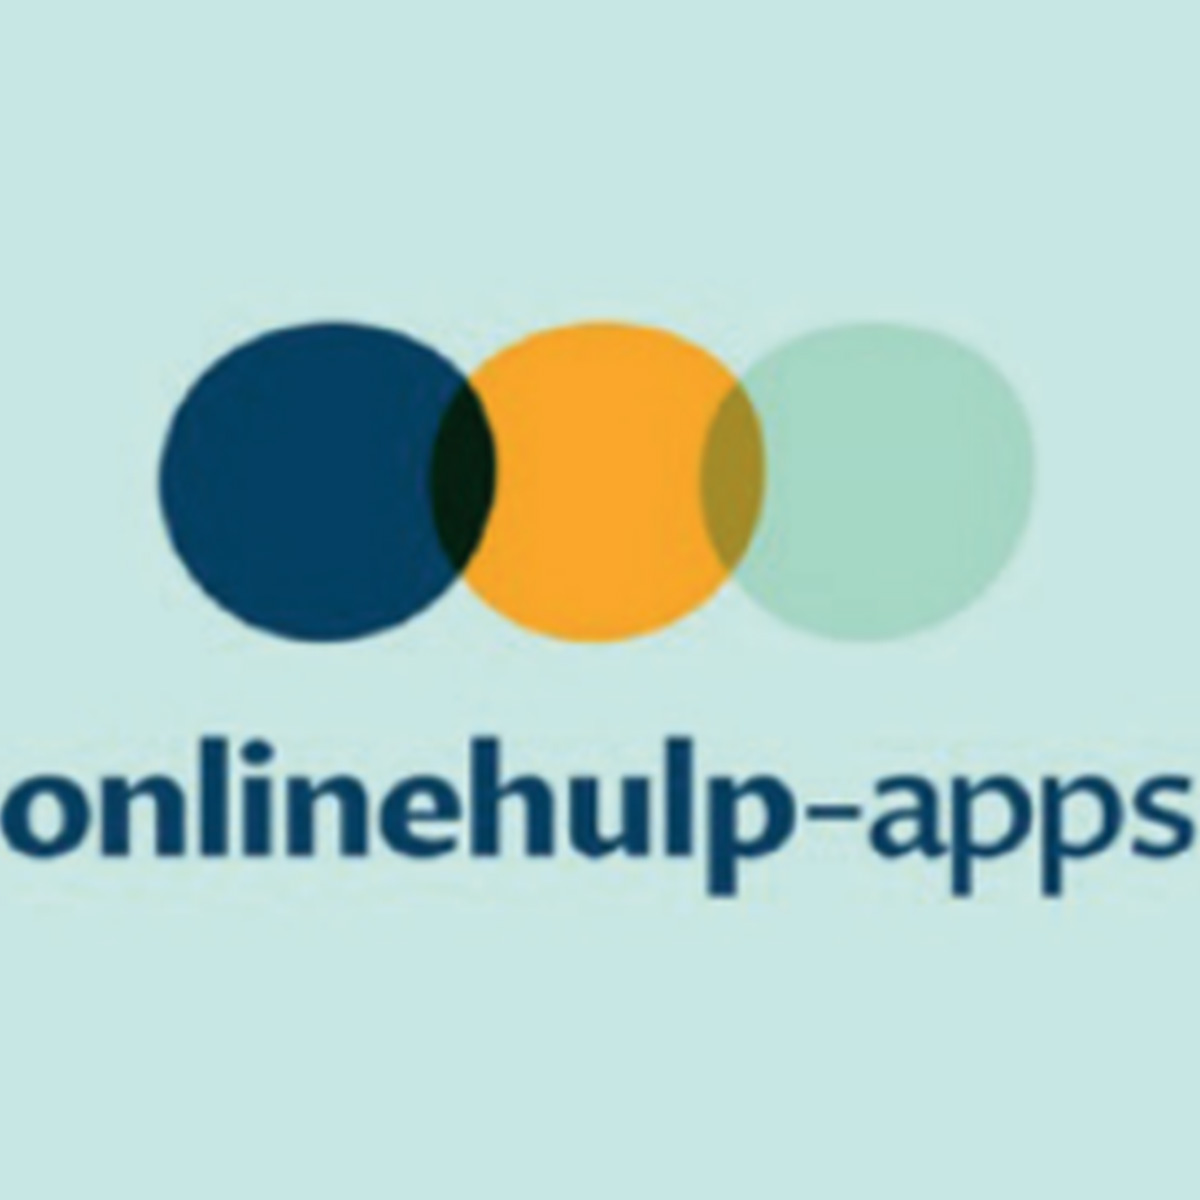 onlinehulp-apps.be